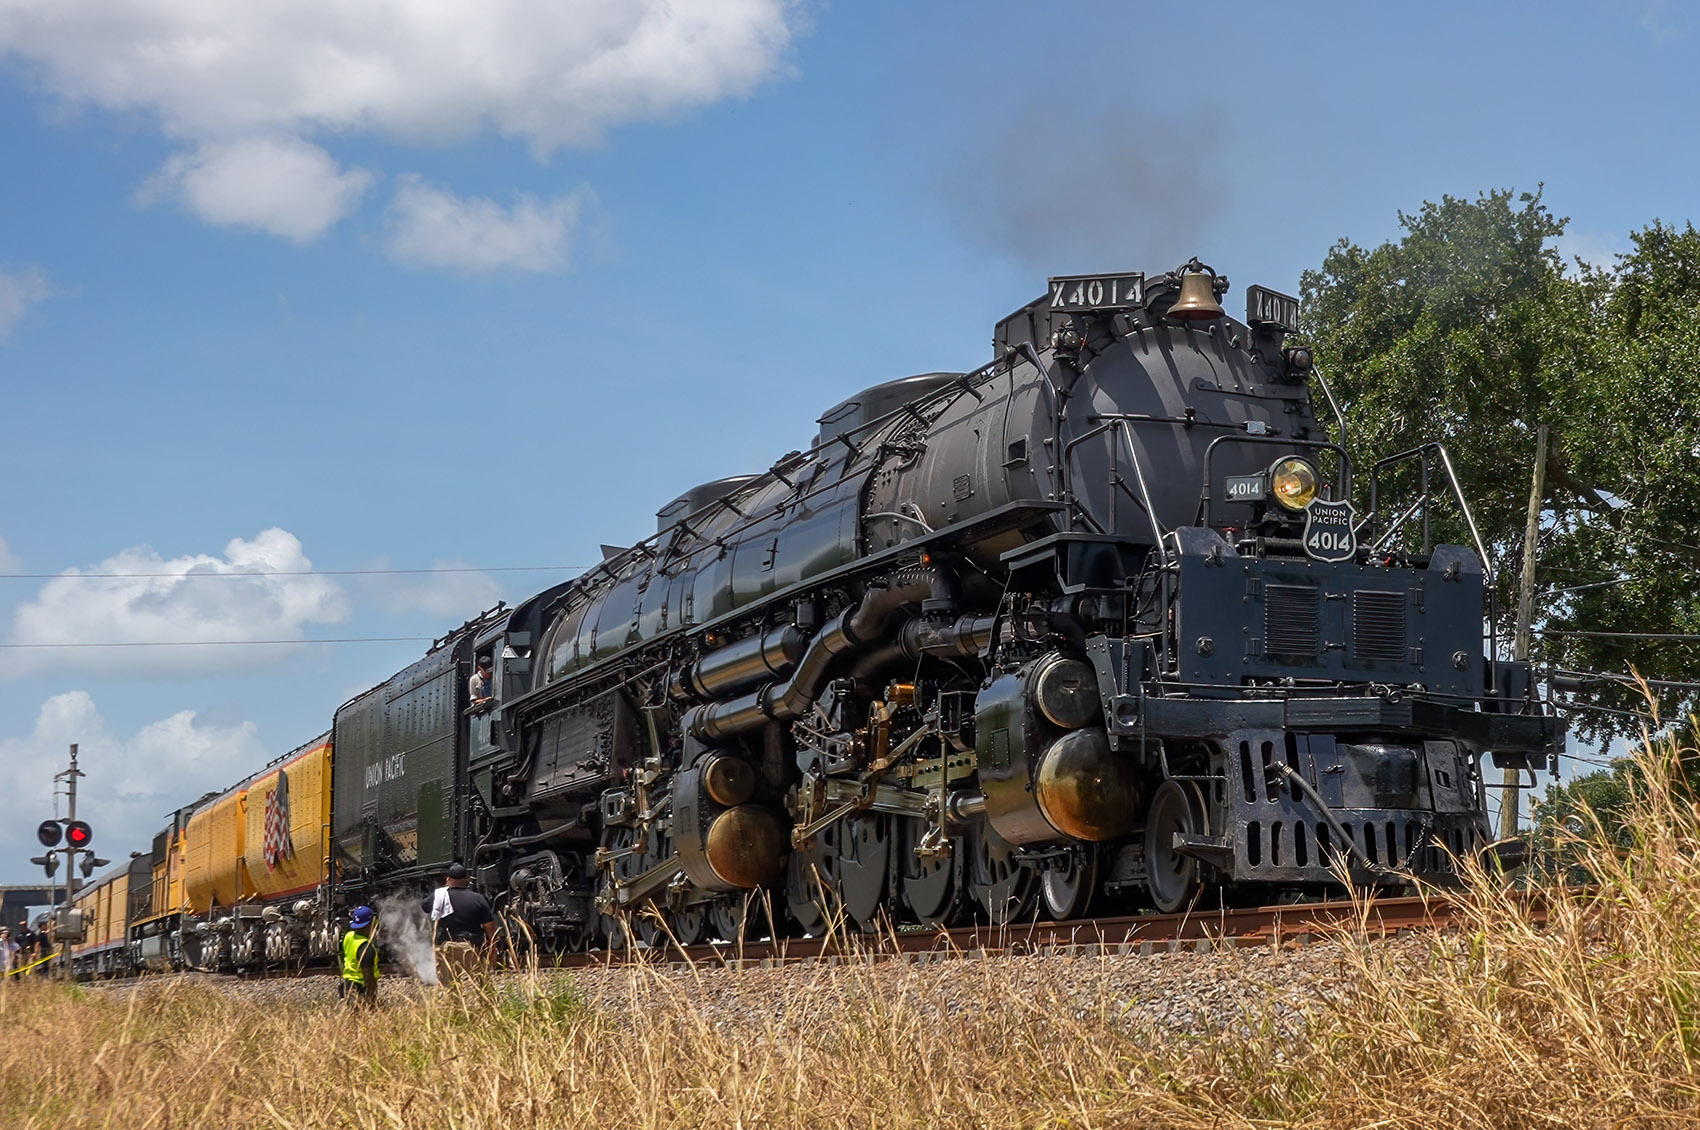 Big Boy Steam Locomotive 4014 on tracks